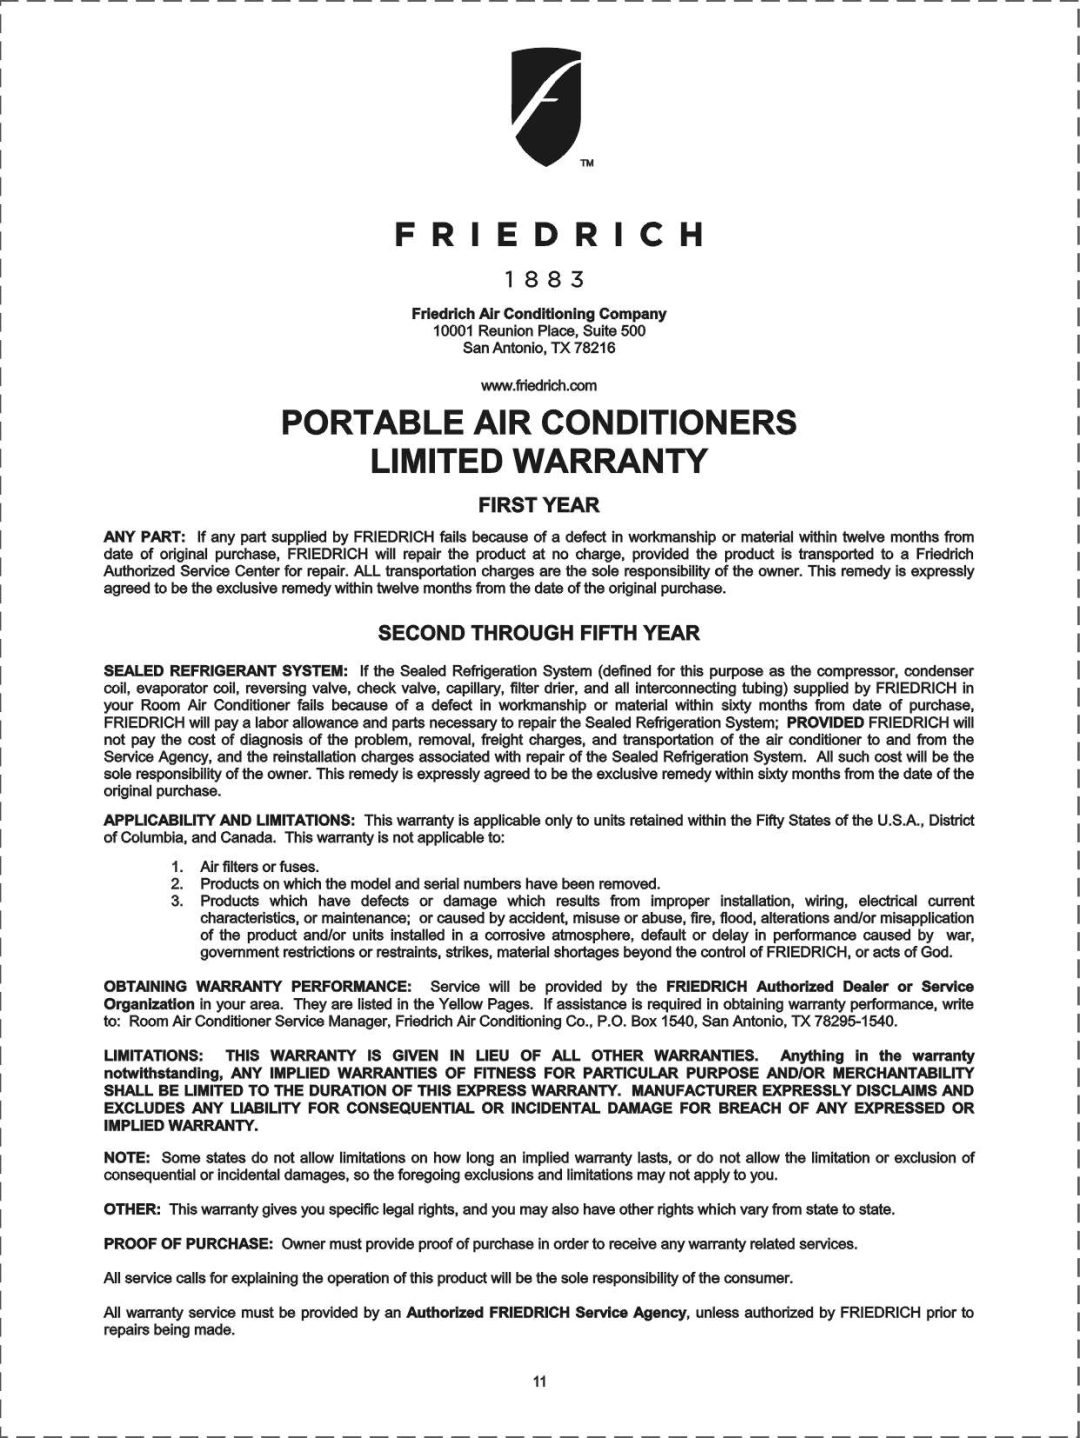 Friedrich A 6 6 2 3 - 0 6 0 manual 